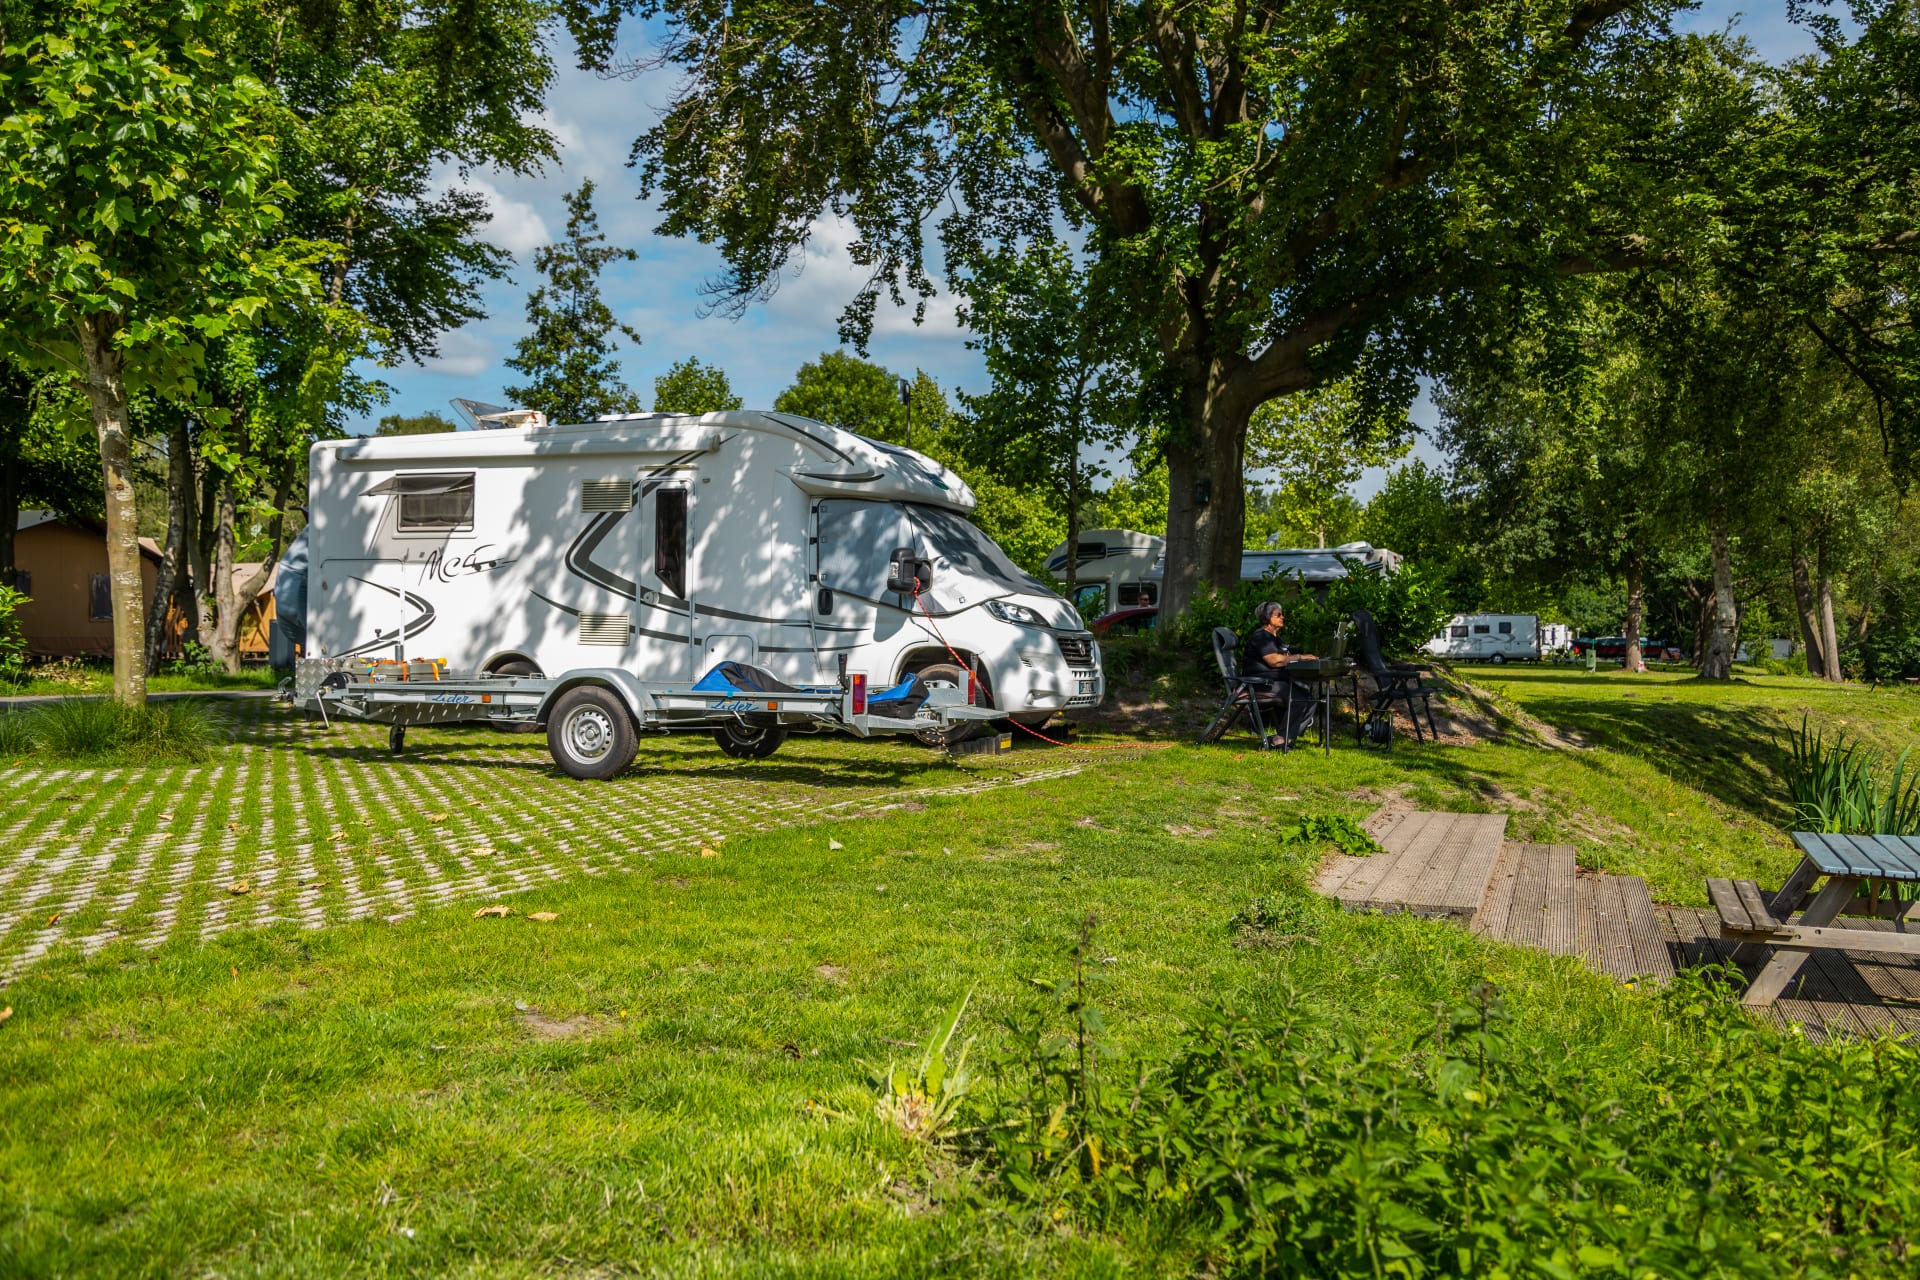 Camperplaats Standaard aan het water - Kampeerplaats voor 6 personen op EuroParcs Het Amsterdamse Bos